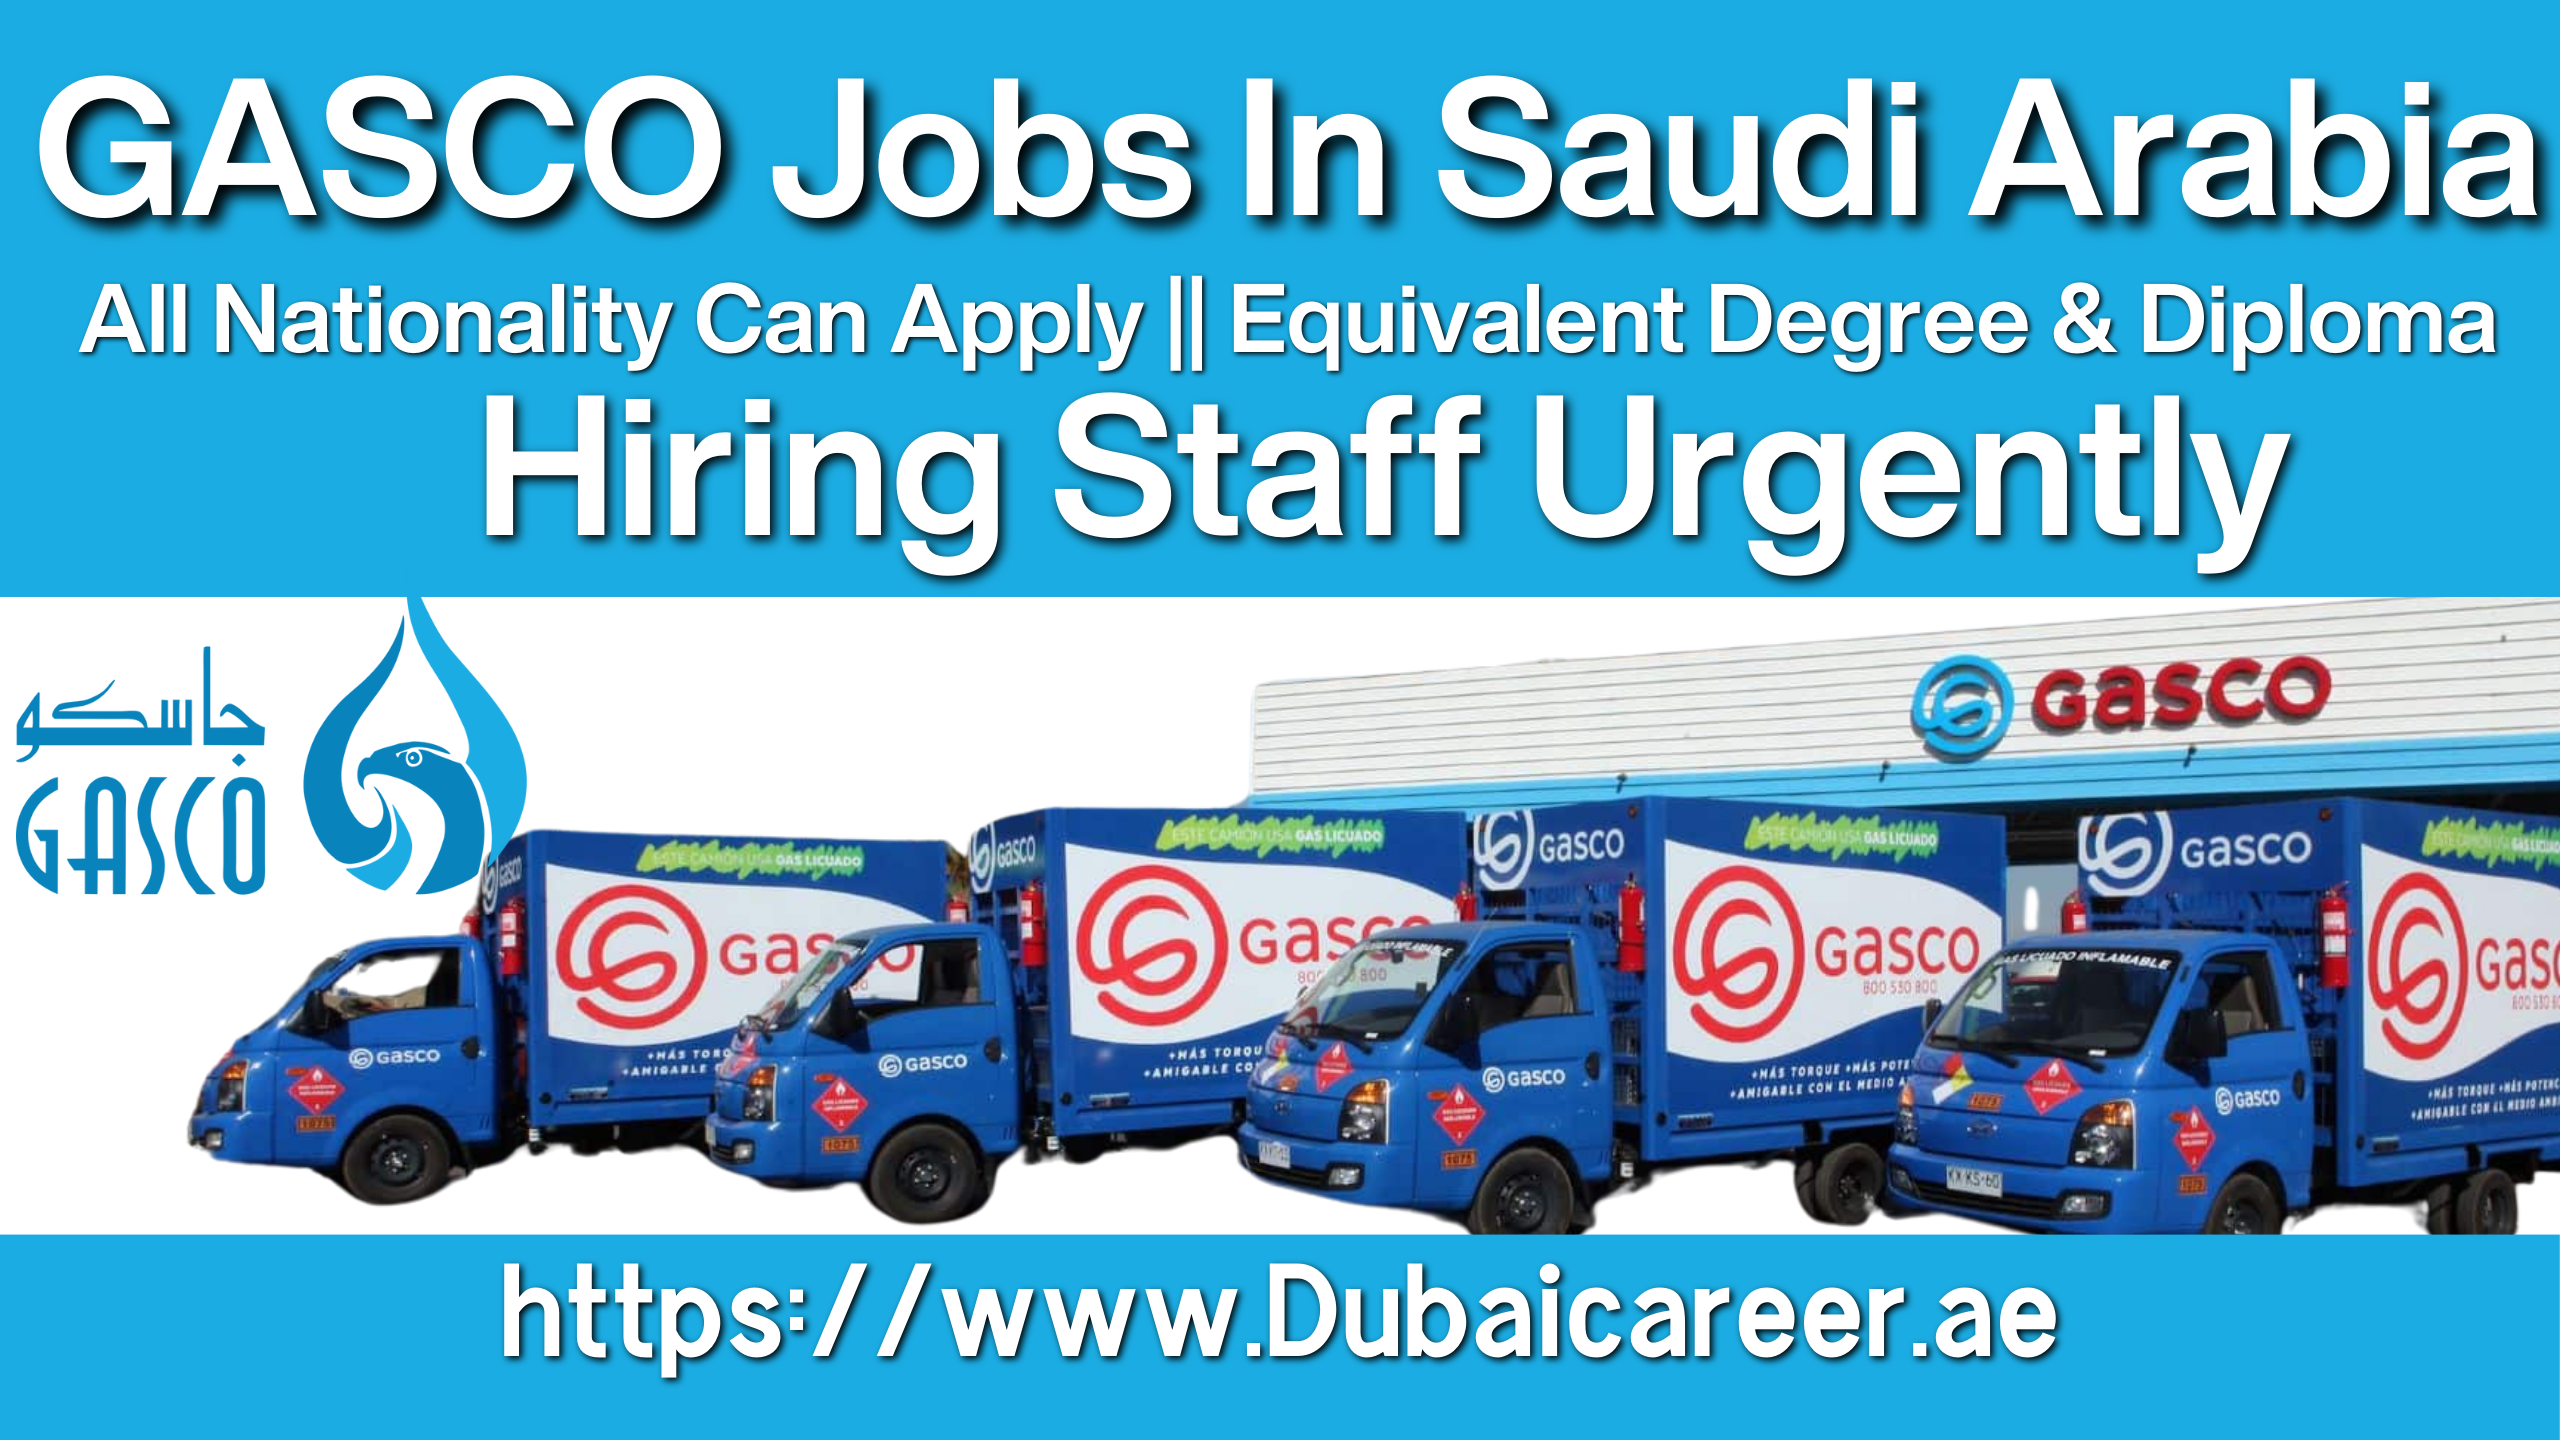 Gasco Careers In Saudi Arabia,Gasco Jobs In Saudi Arabia